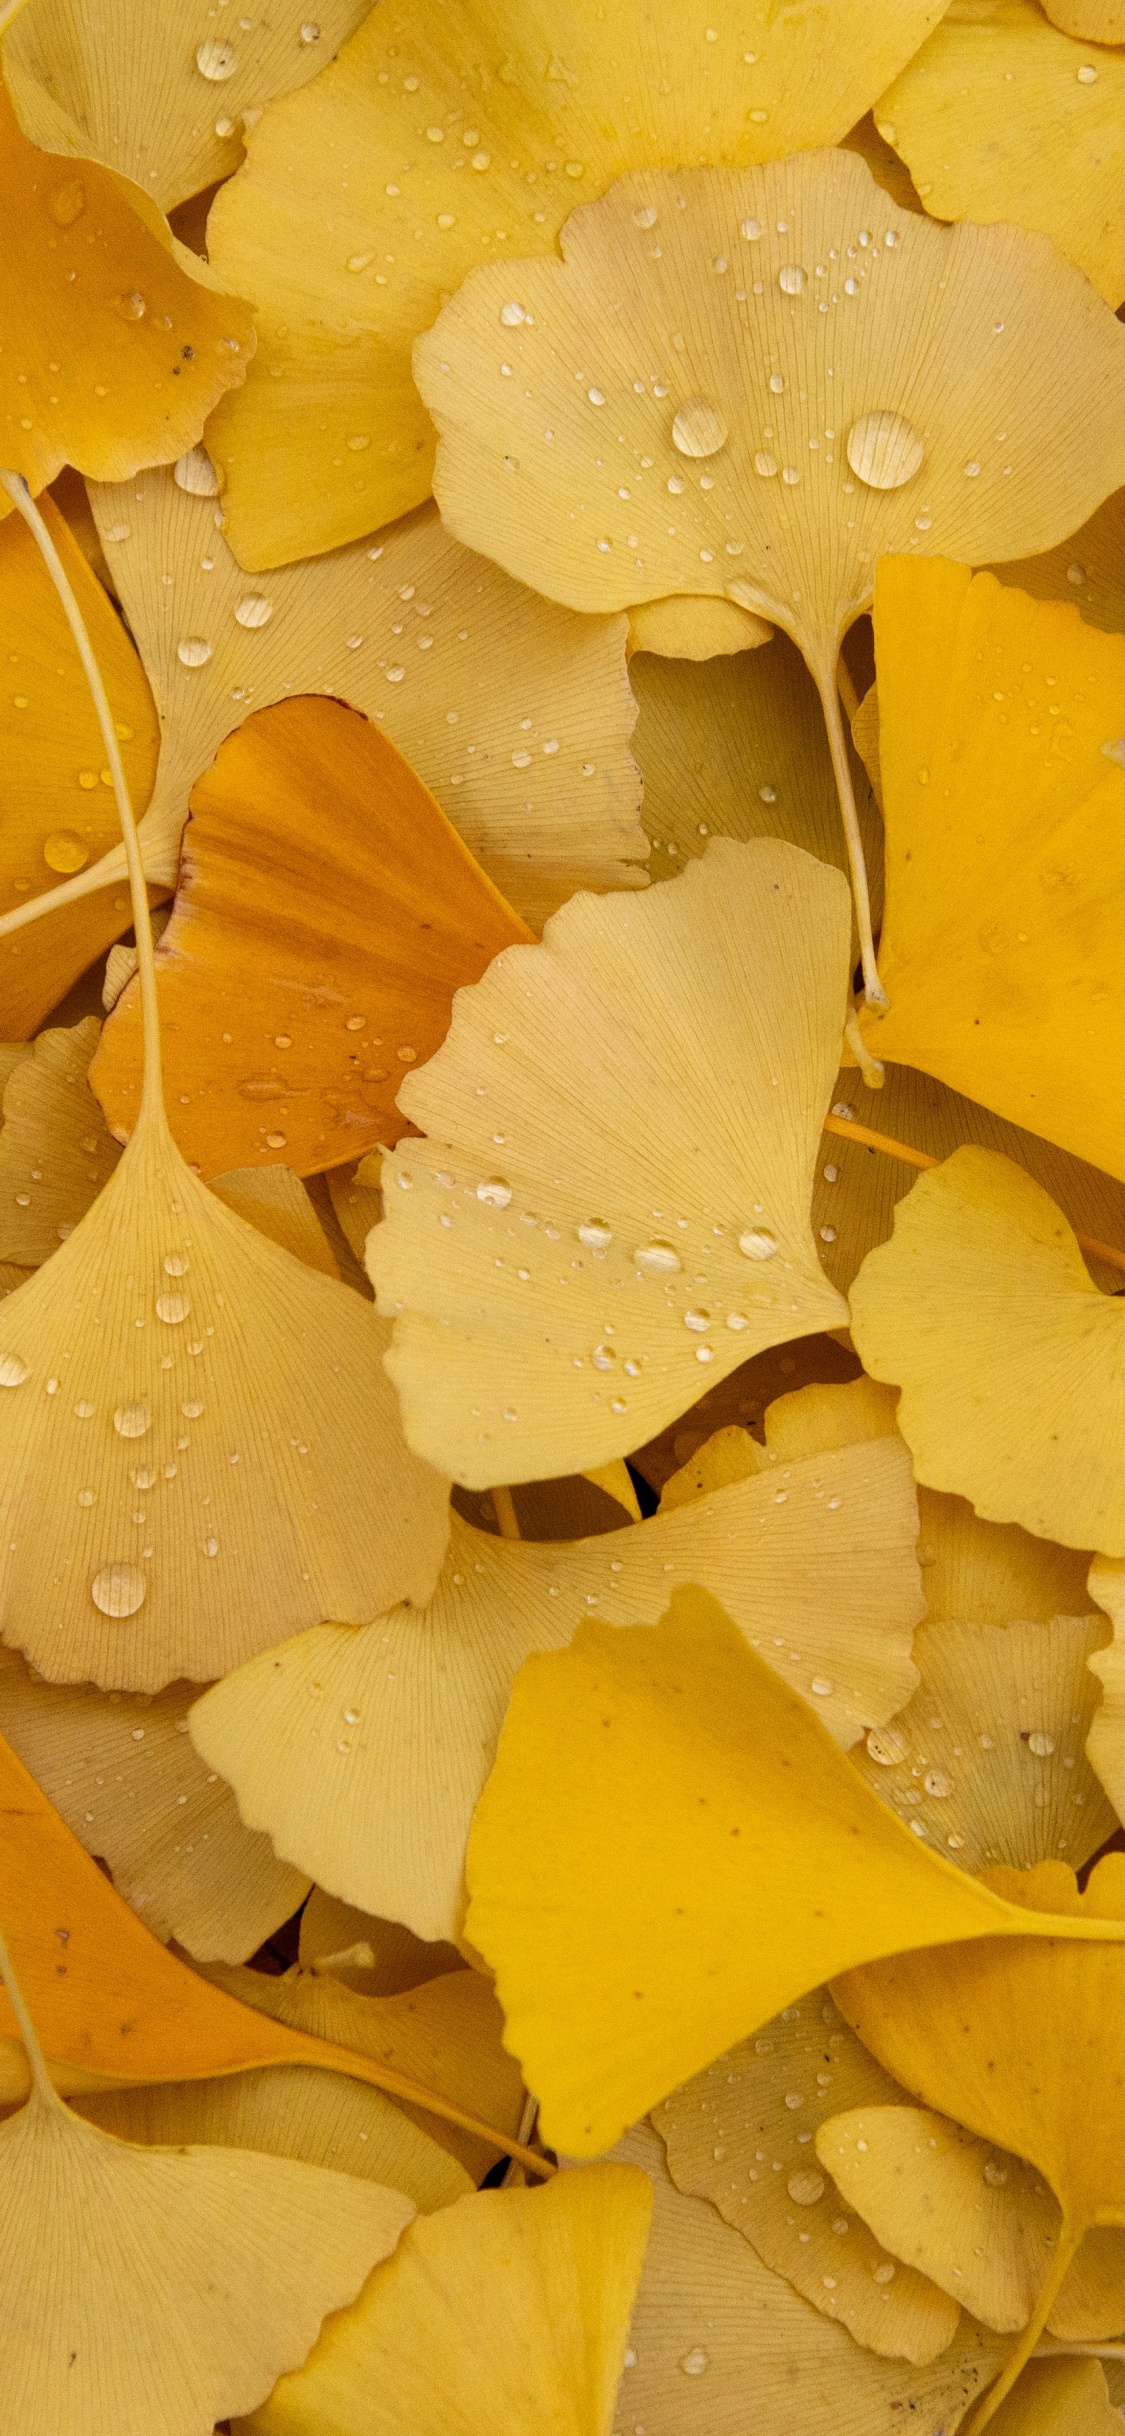 Ginkgo Leaves 4K Wallpaper, Yellow leaves, Autumn, Foliage, Dew Drops